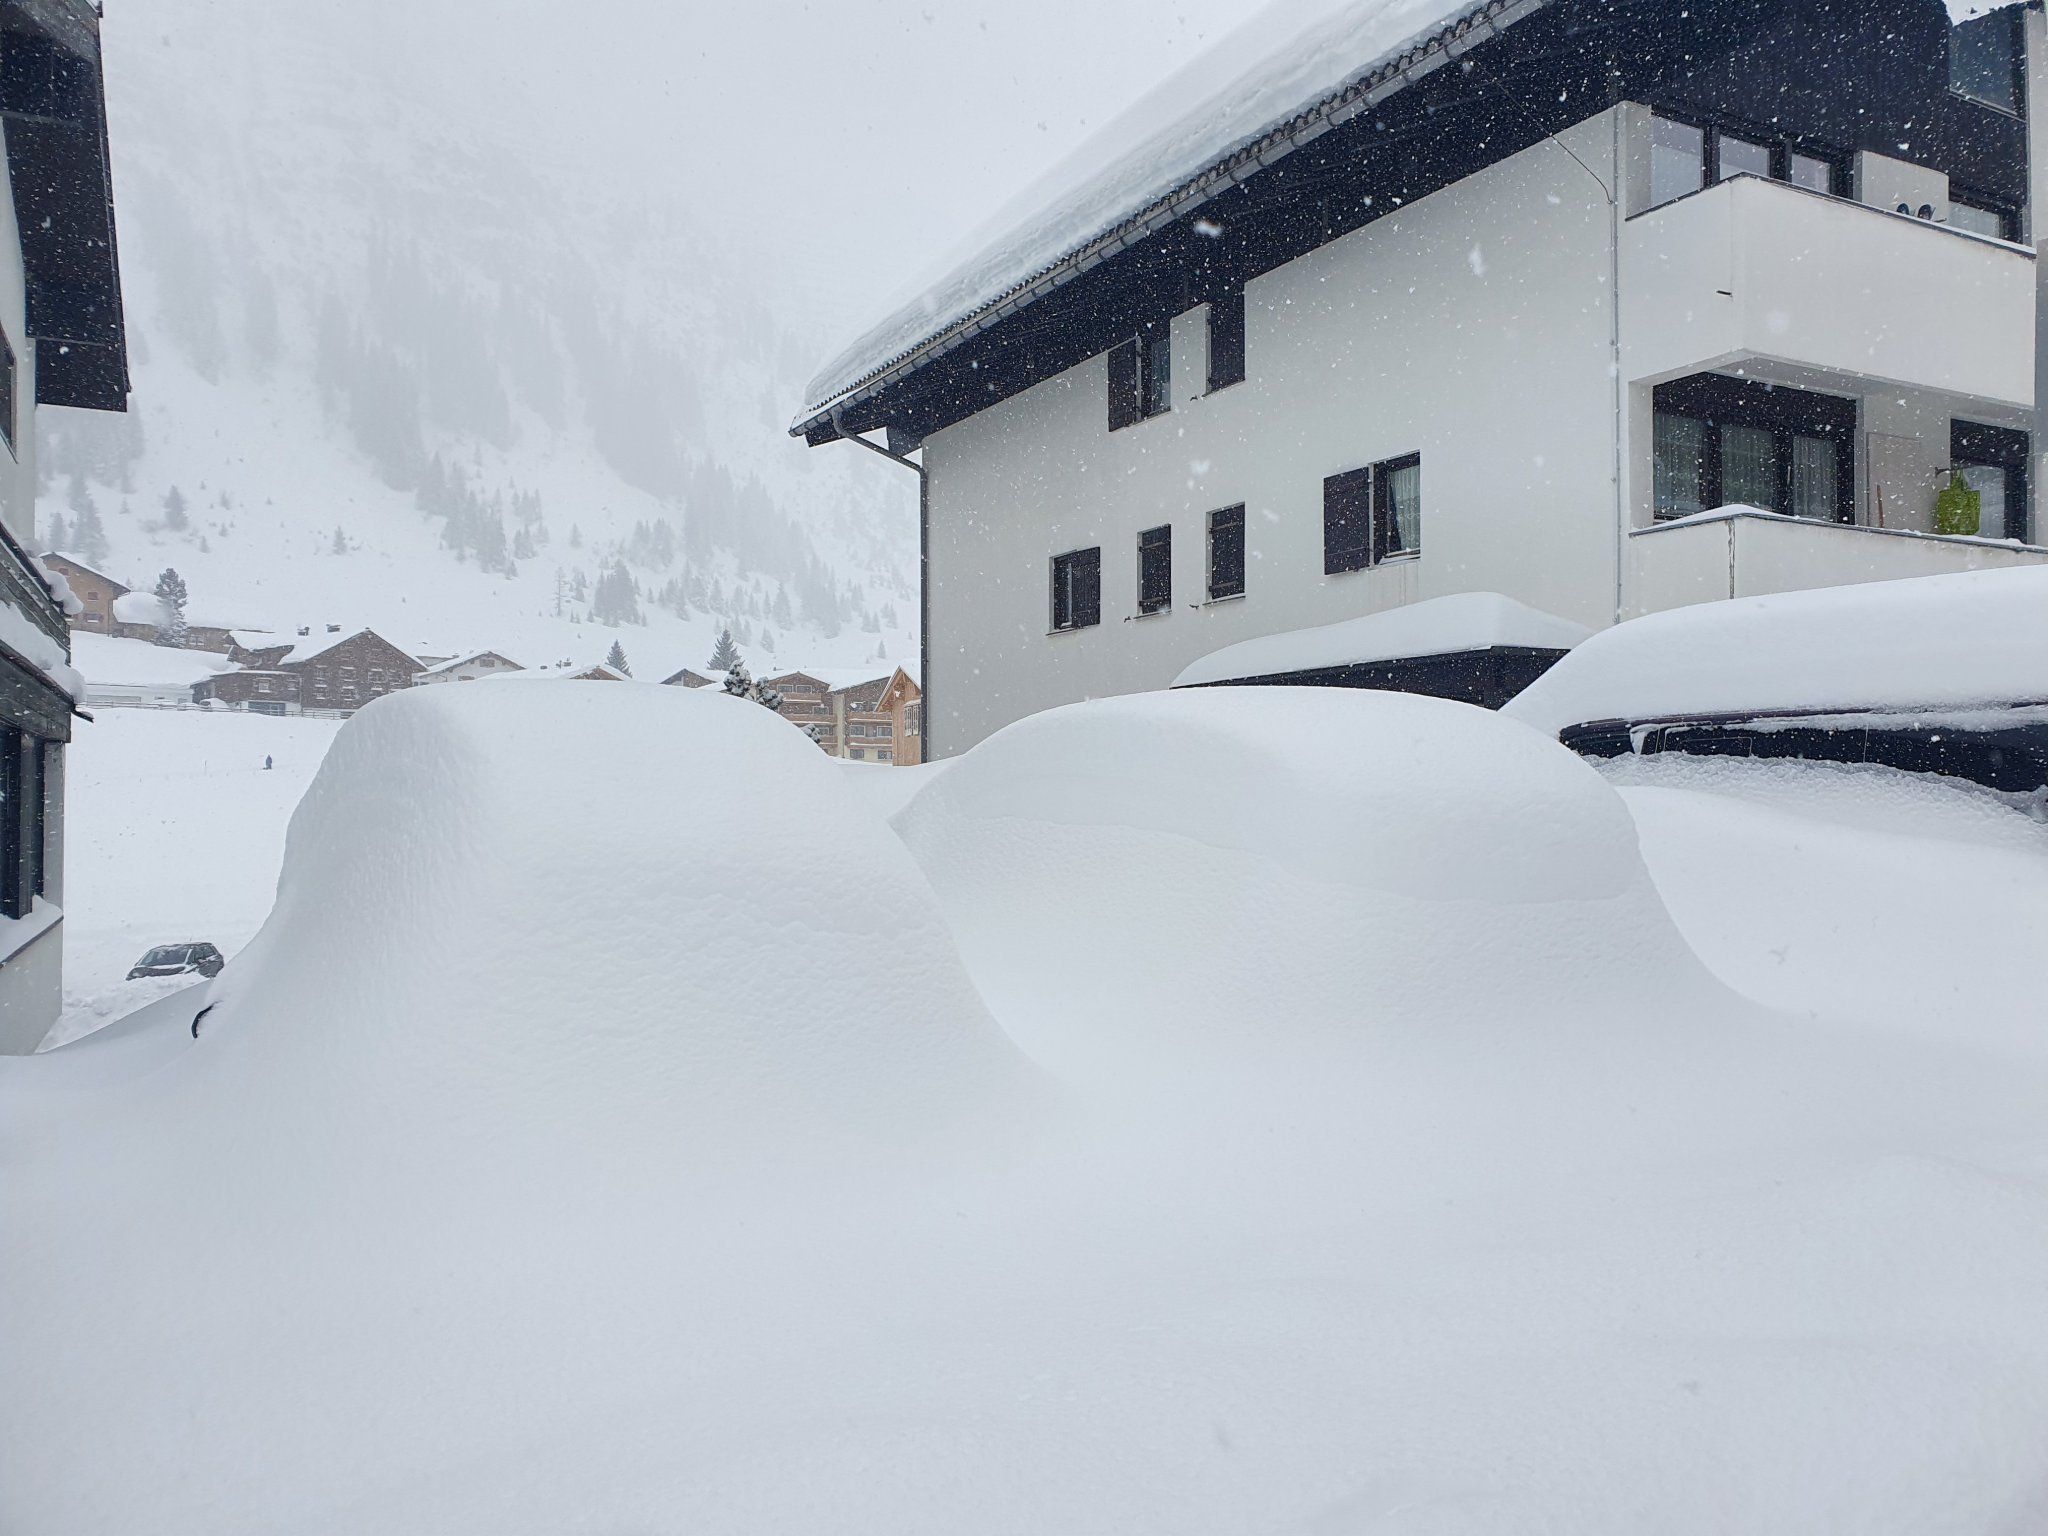 Enorme dump in Lech (FB Lech Zürs am Arlberg)